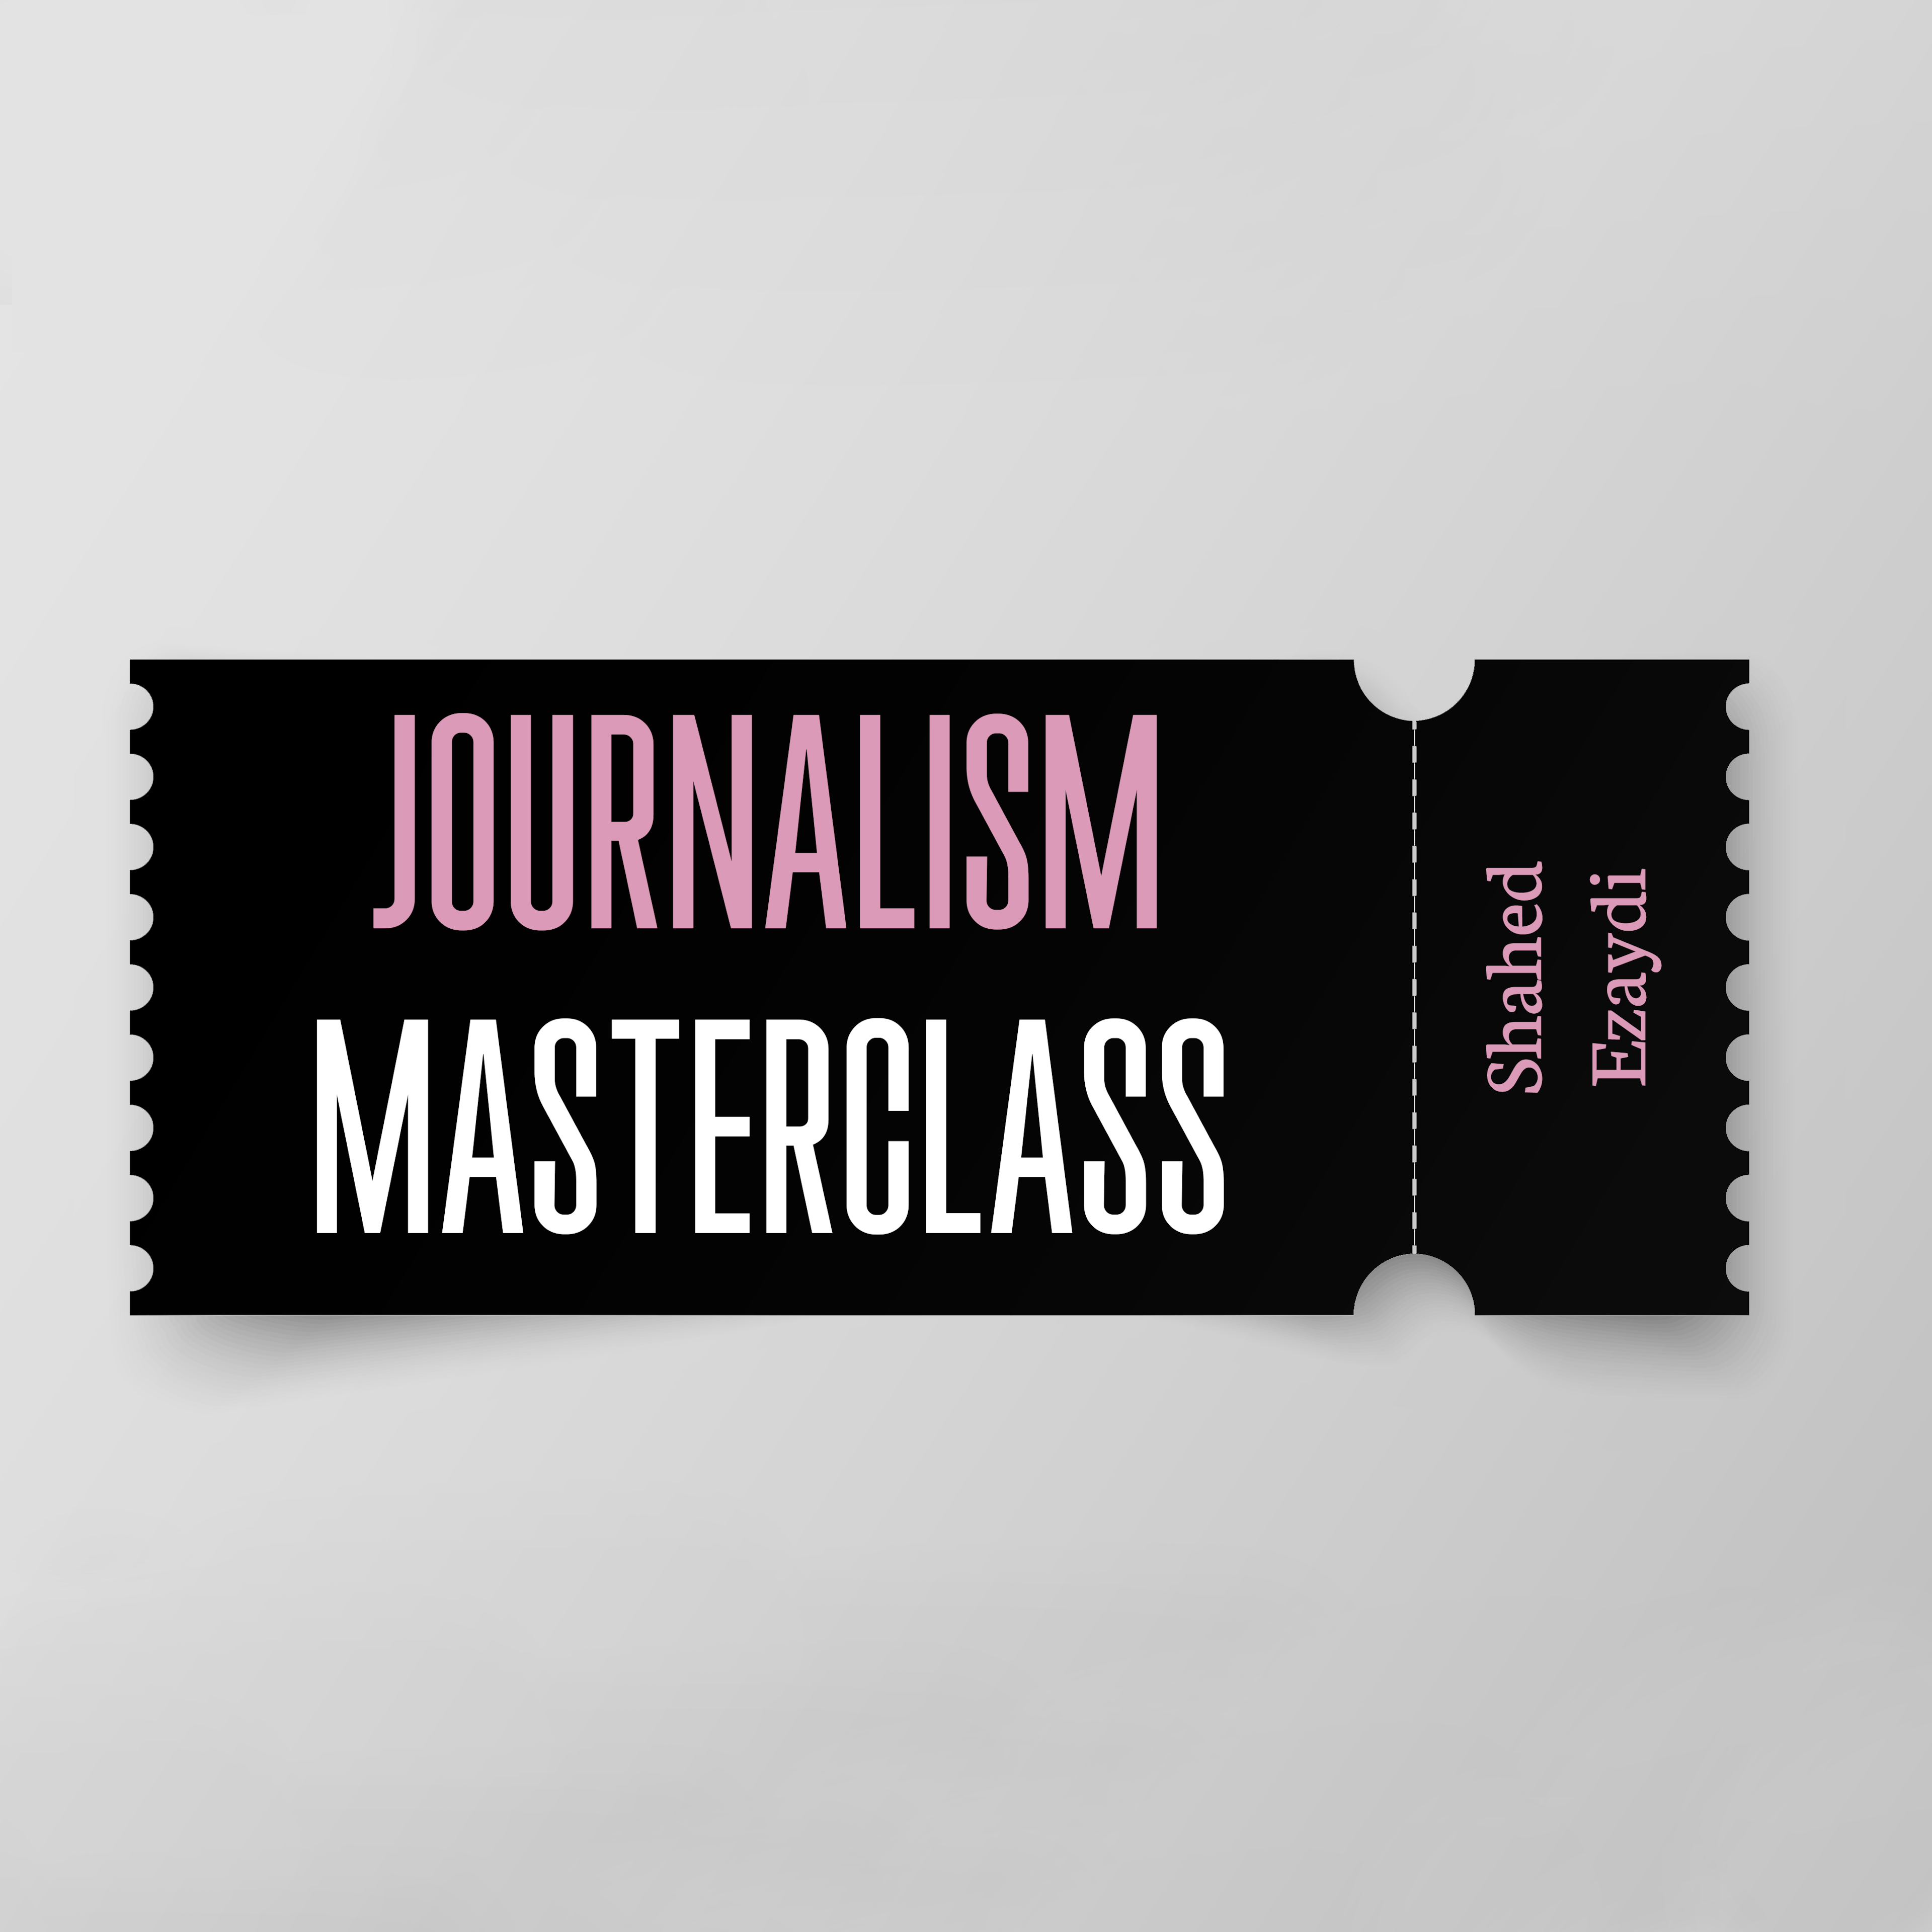 Journalism Masterclass